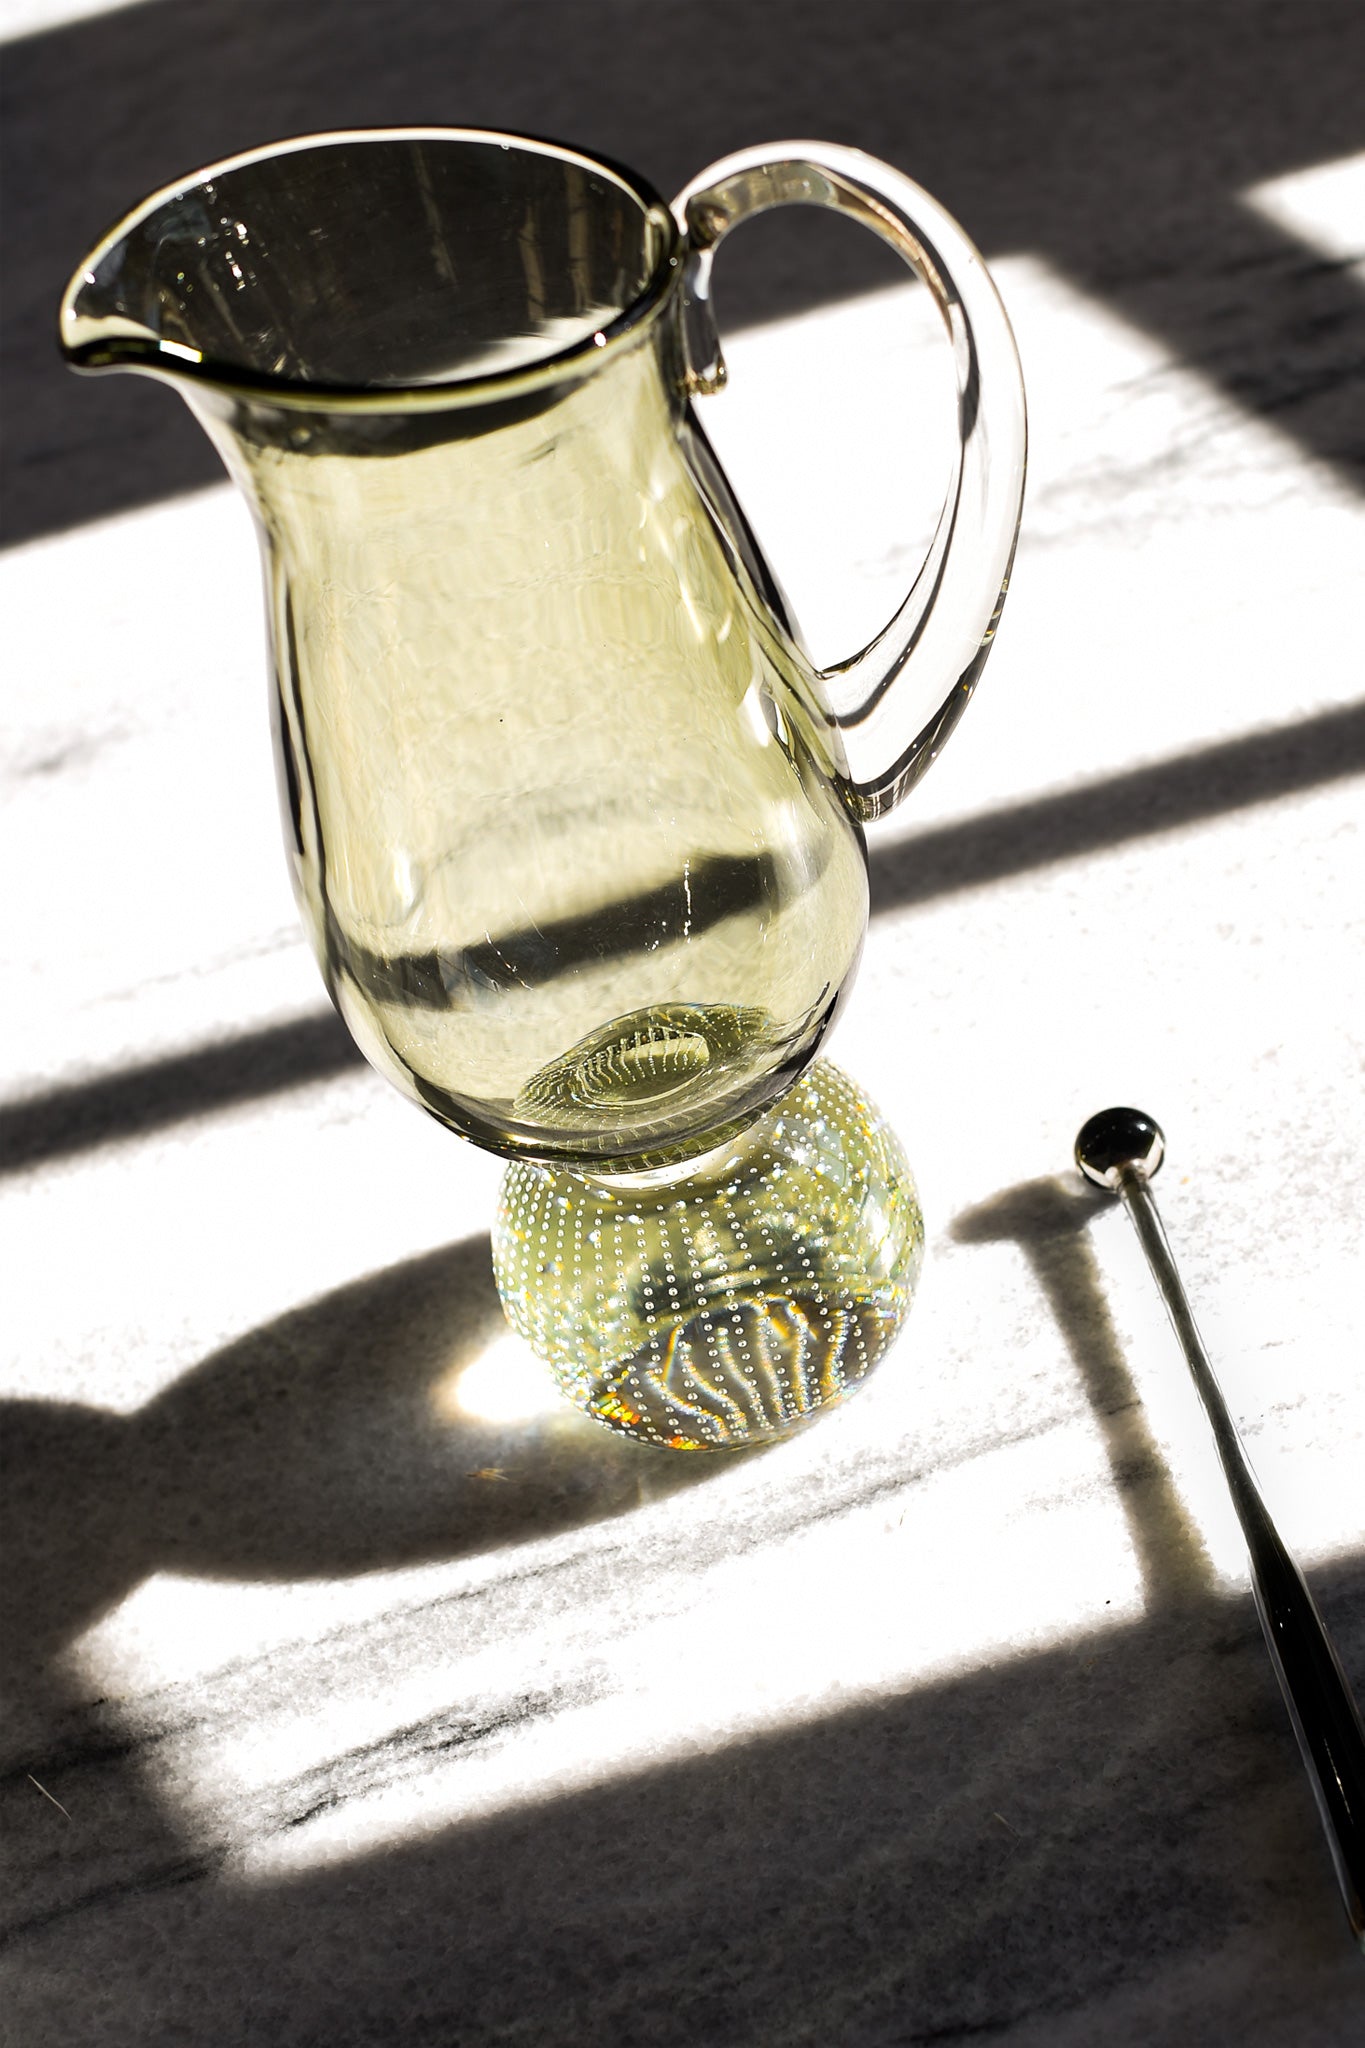 Vintage modern Erickson art smoke glass pitcher from late 20th Century